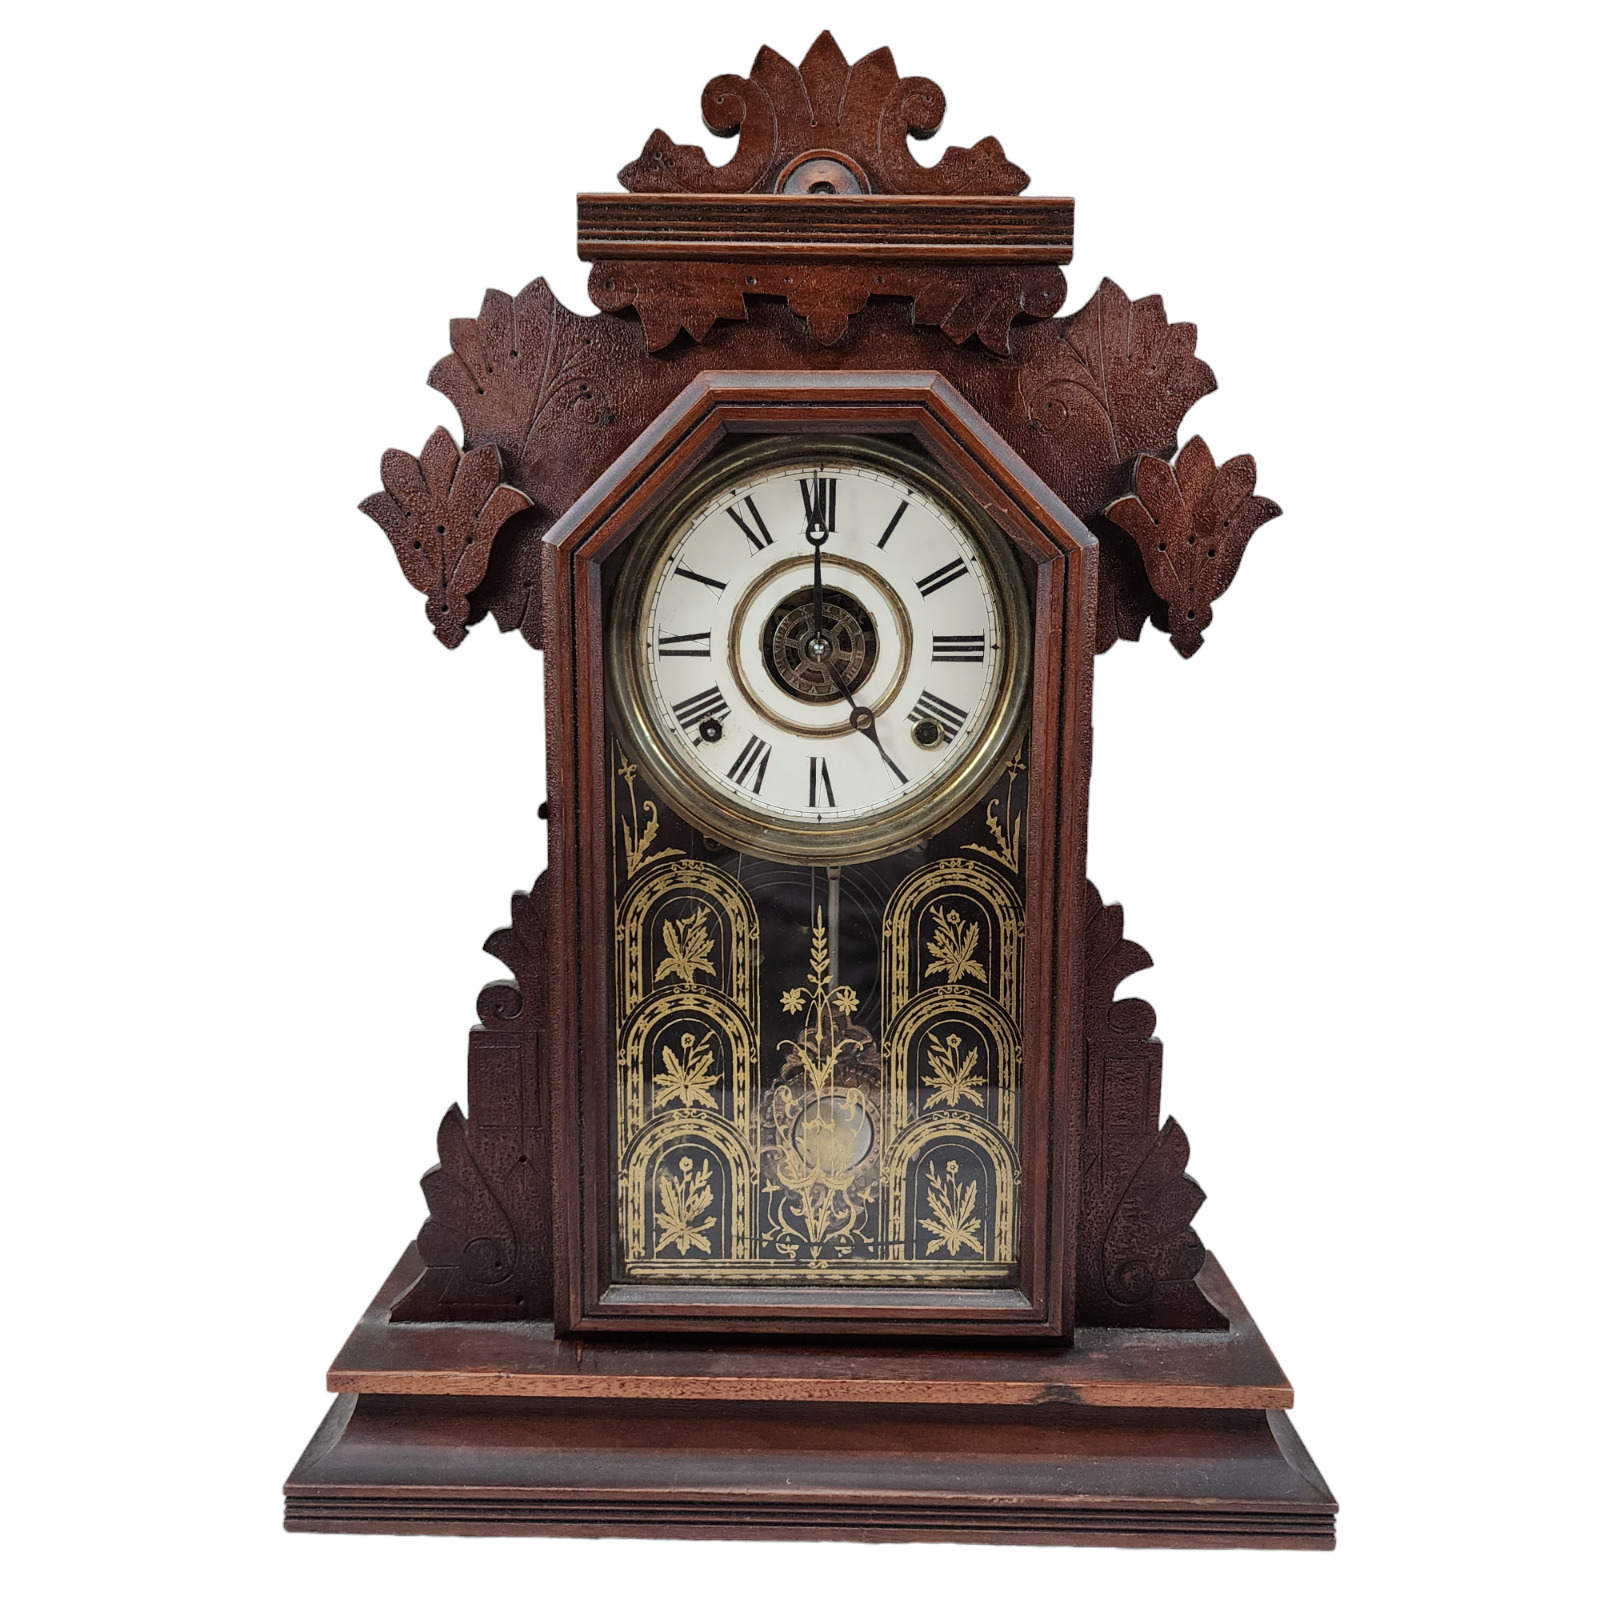 Ingraham Parlor Ginger Brest Mantle Clock, 8 Day T&S, Calendar, Mahogany Finish